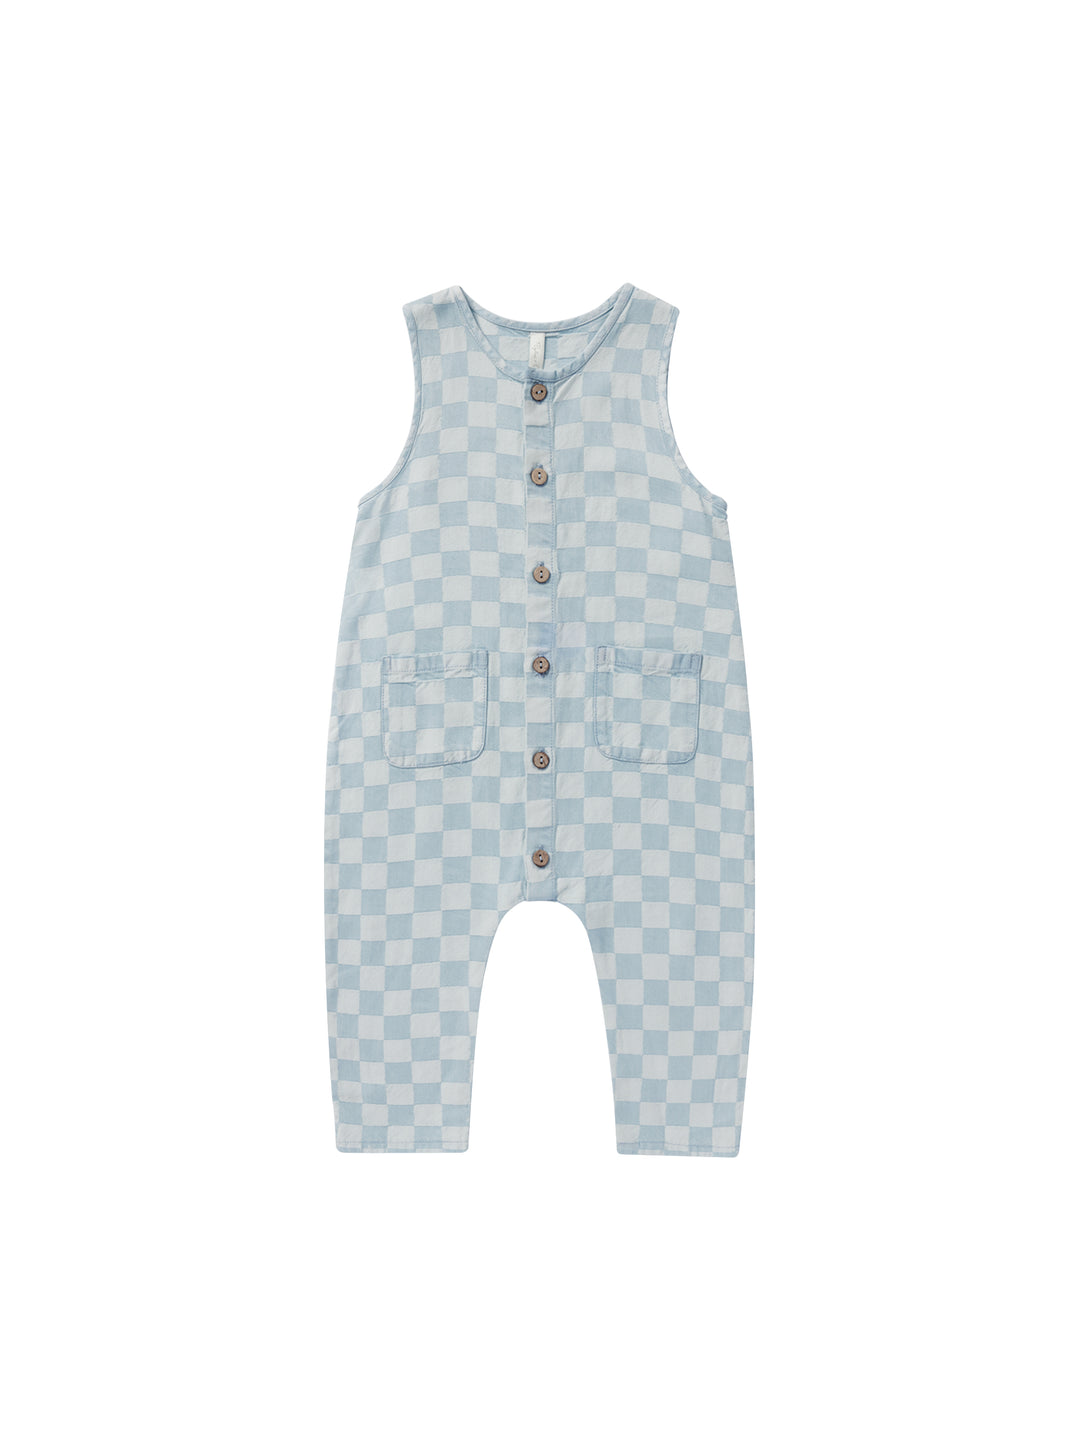 Rylee + Cru Woven Jumpsuit, Blue Check |Mockingbird Baby & Kids